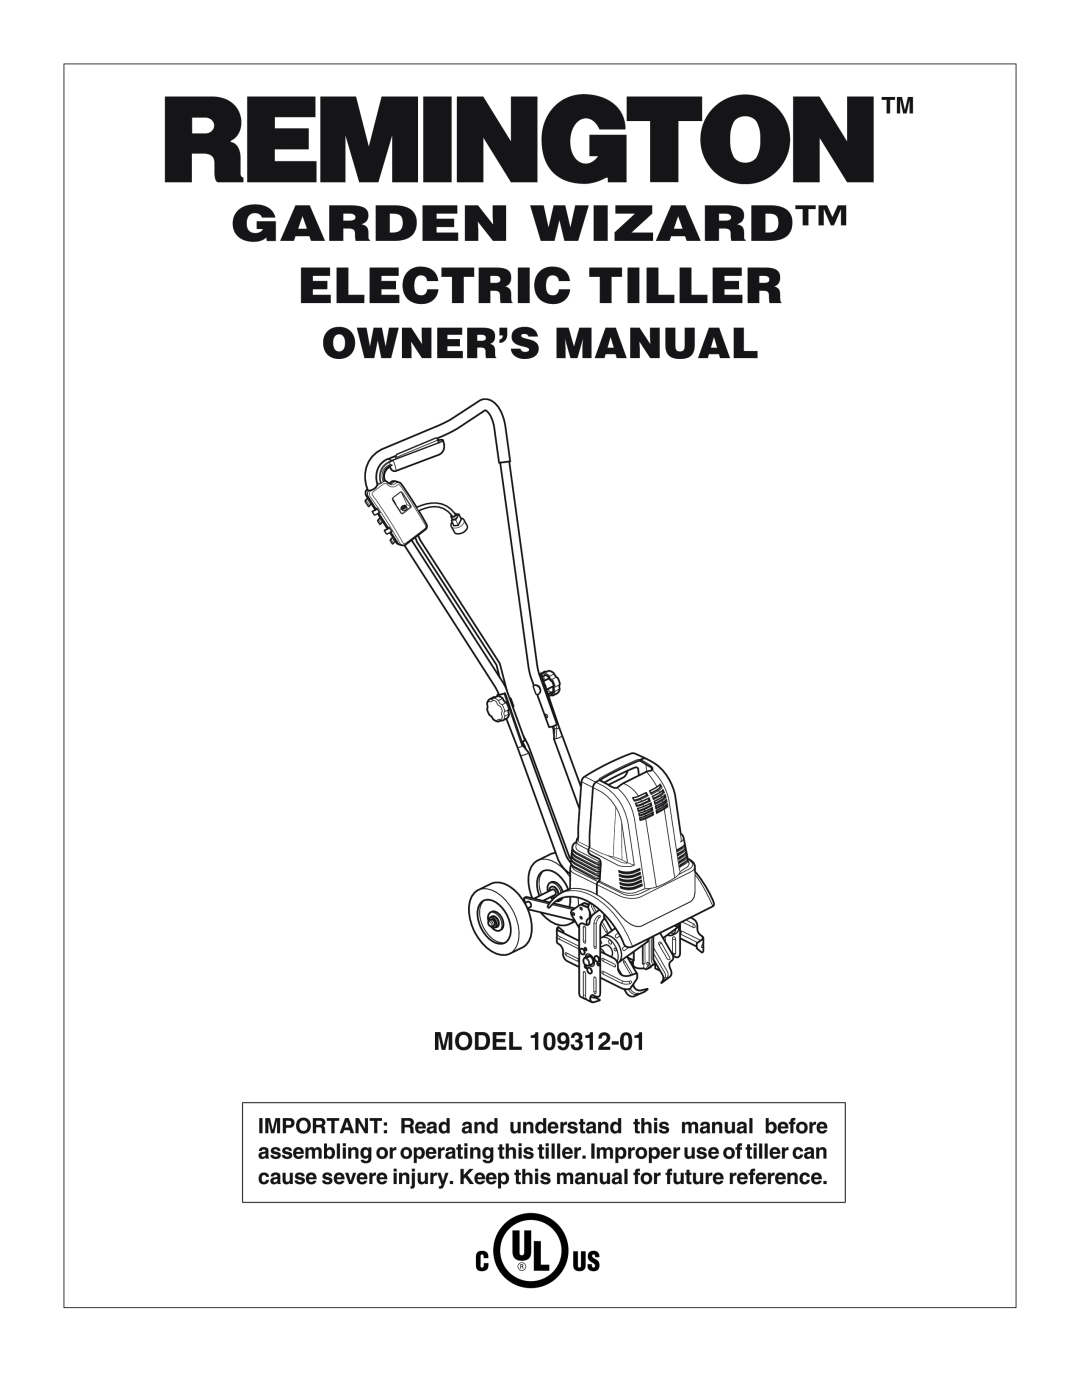 Remington 109312-01 owner manual Garden Wizard Electric Tiller, Owner’S Manual, Model 